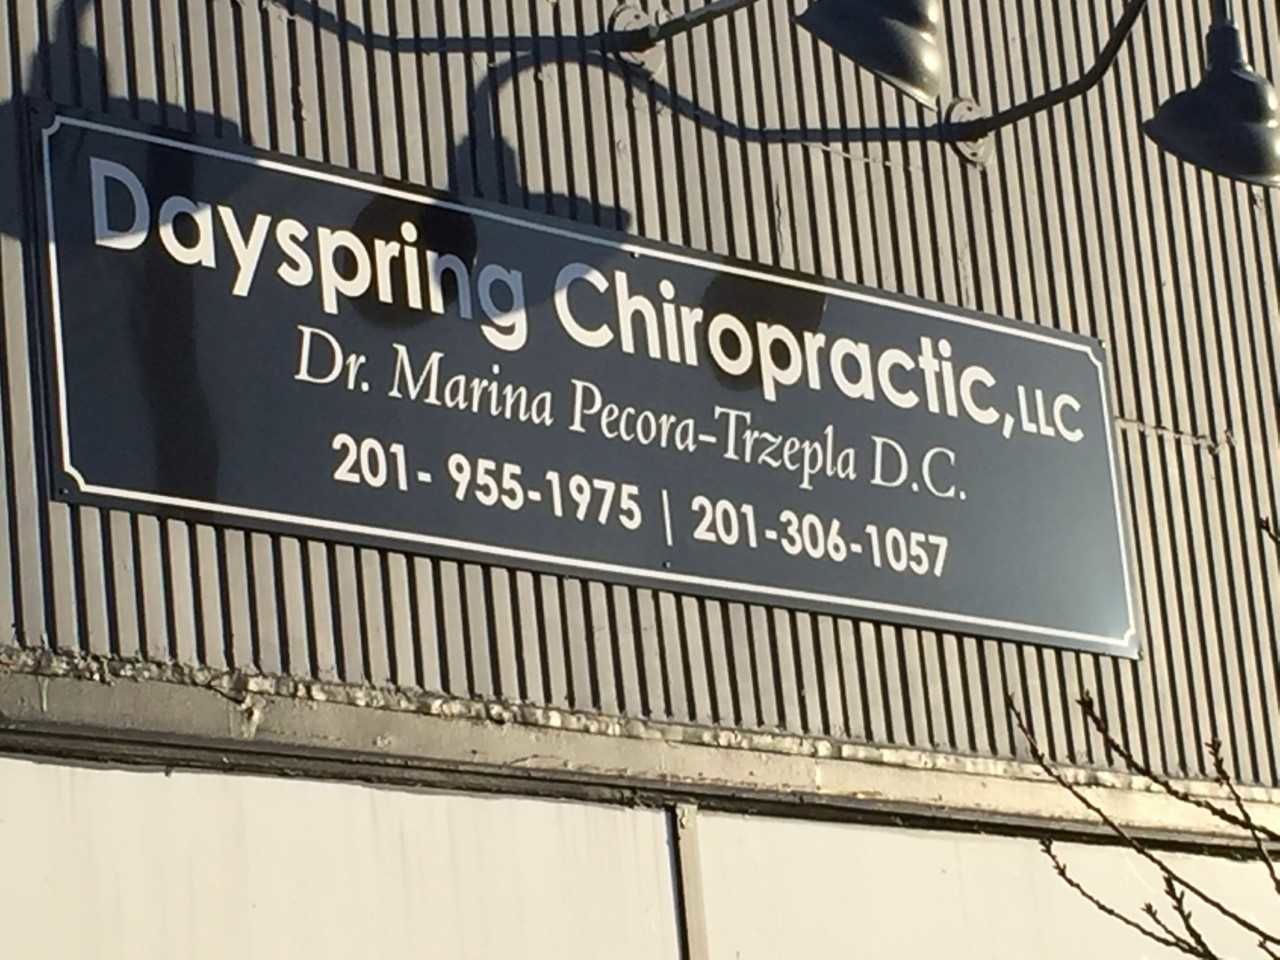 Dayspring Chiropractic LLC